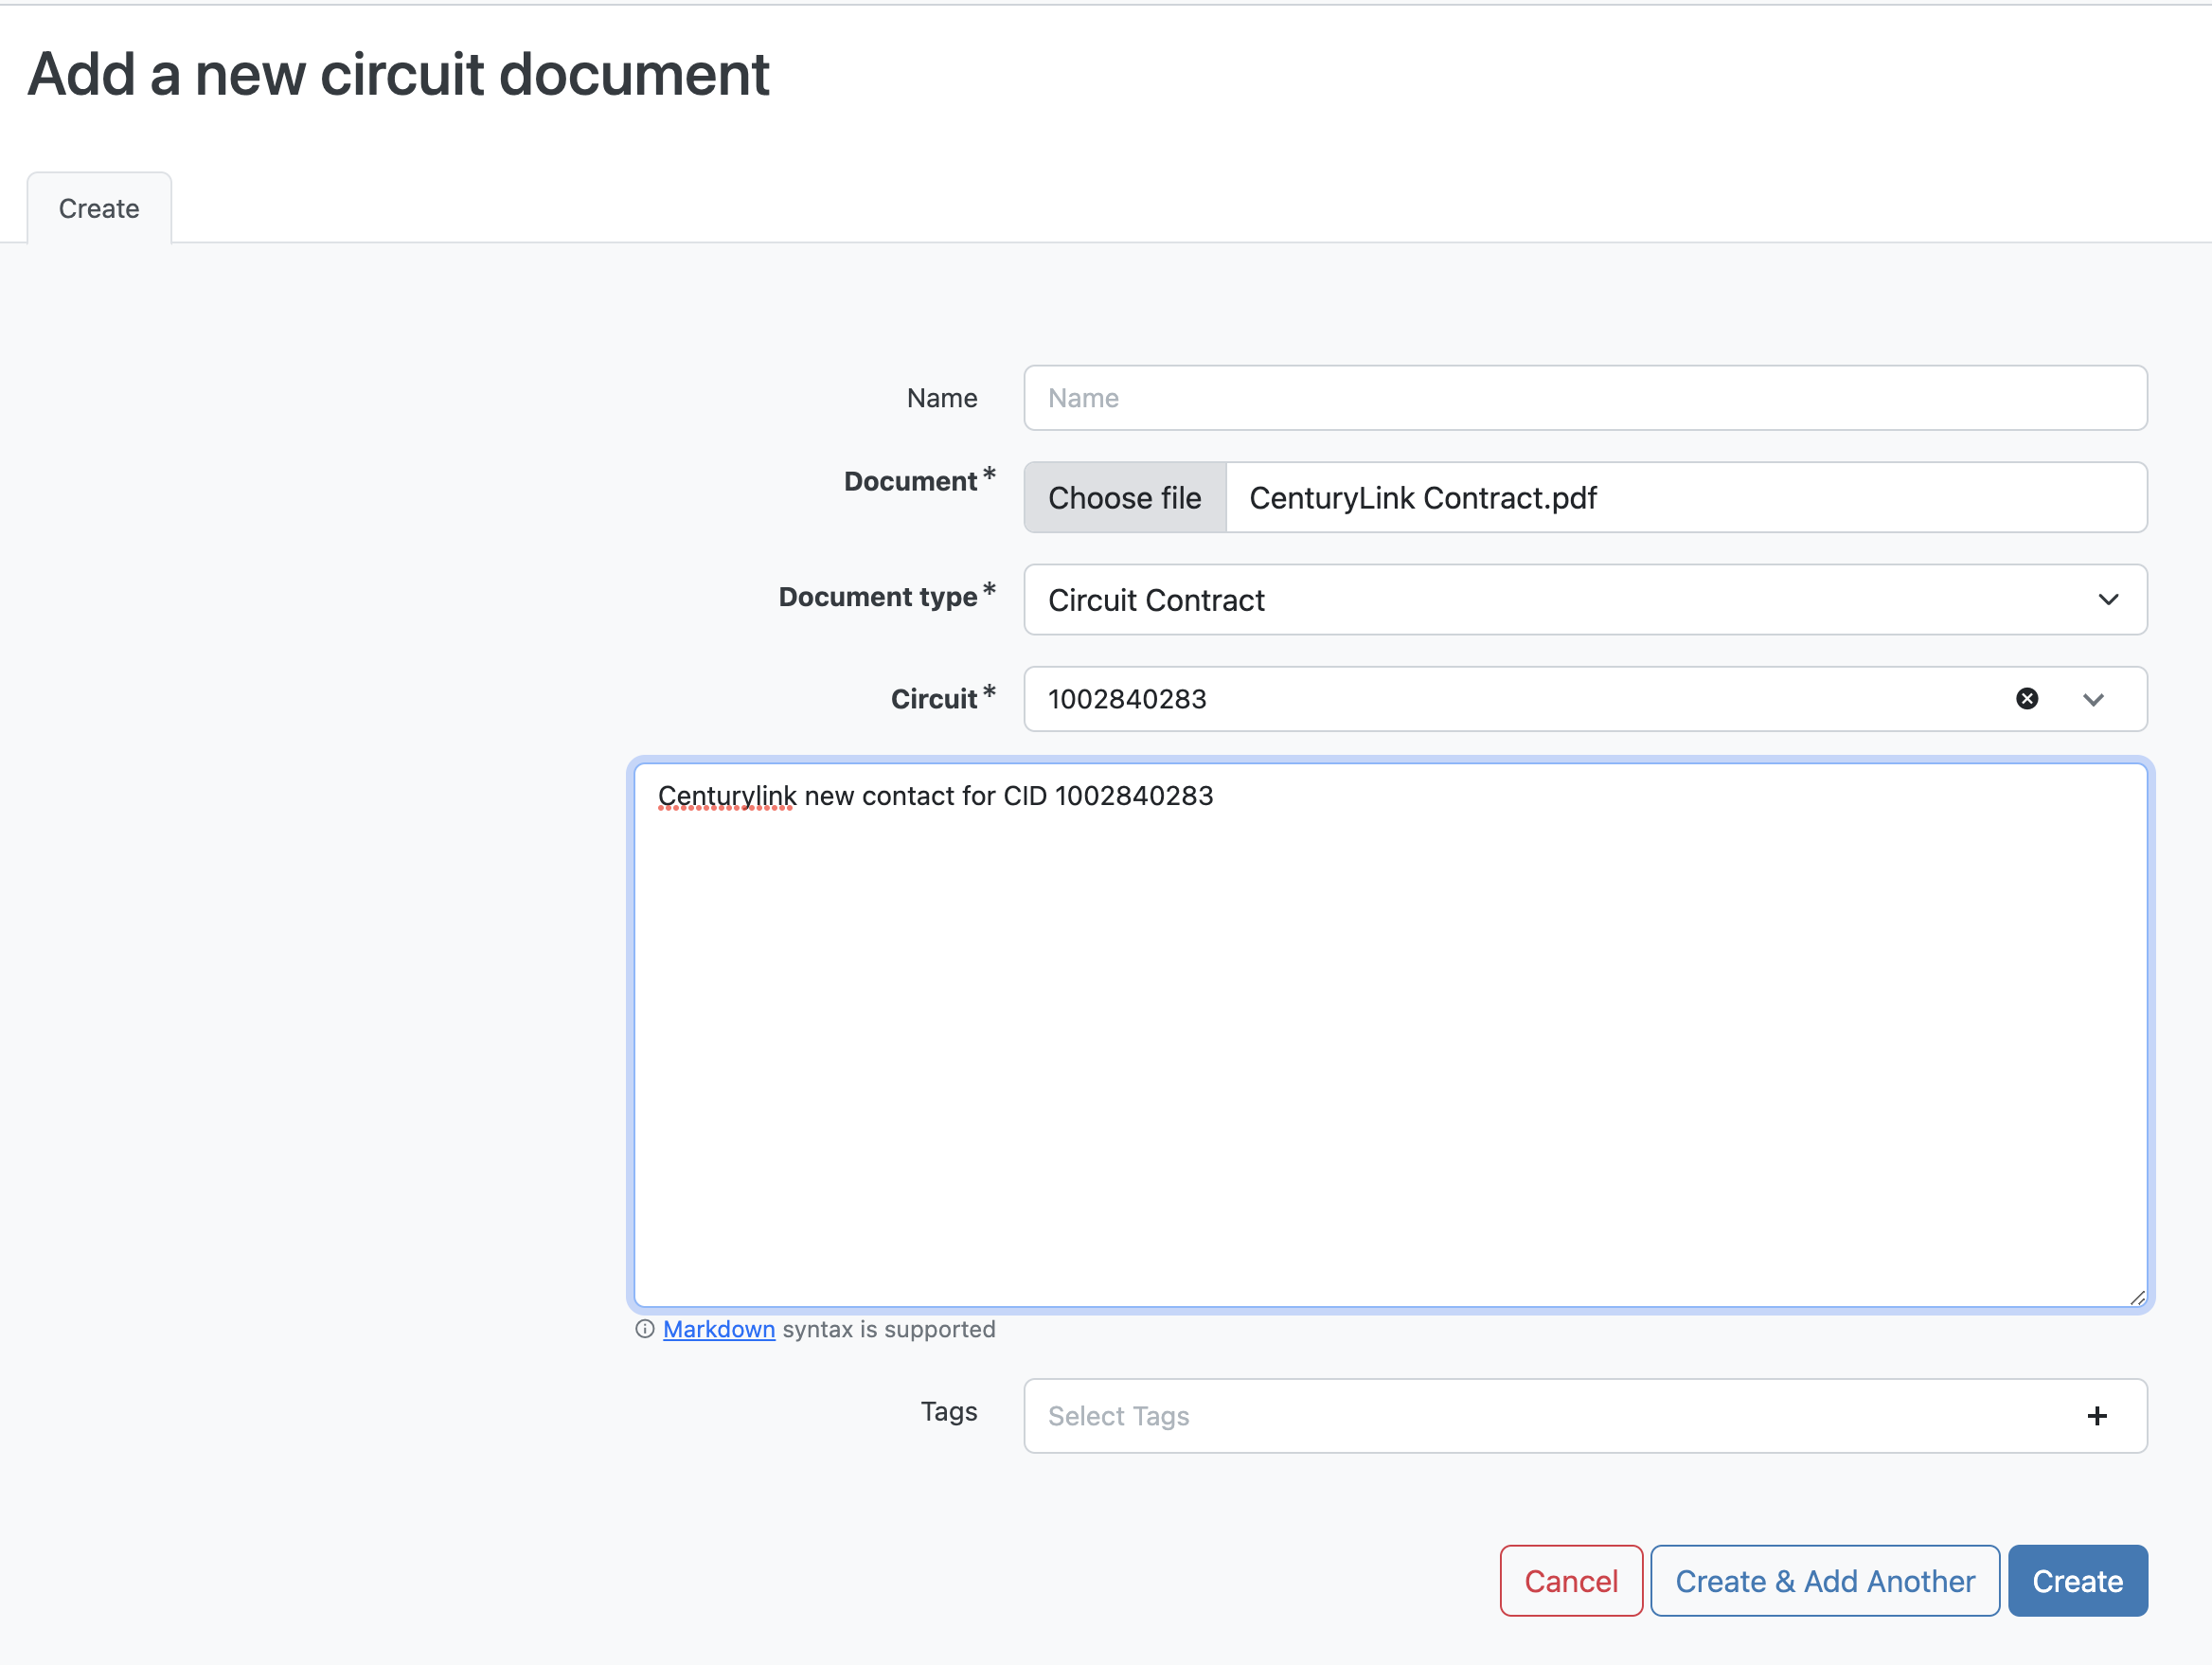 Add Circuit Document